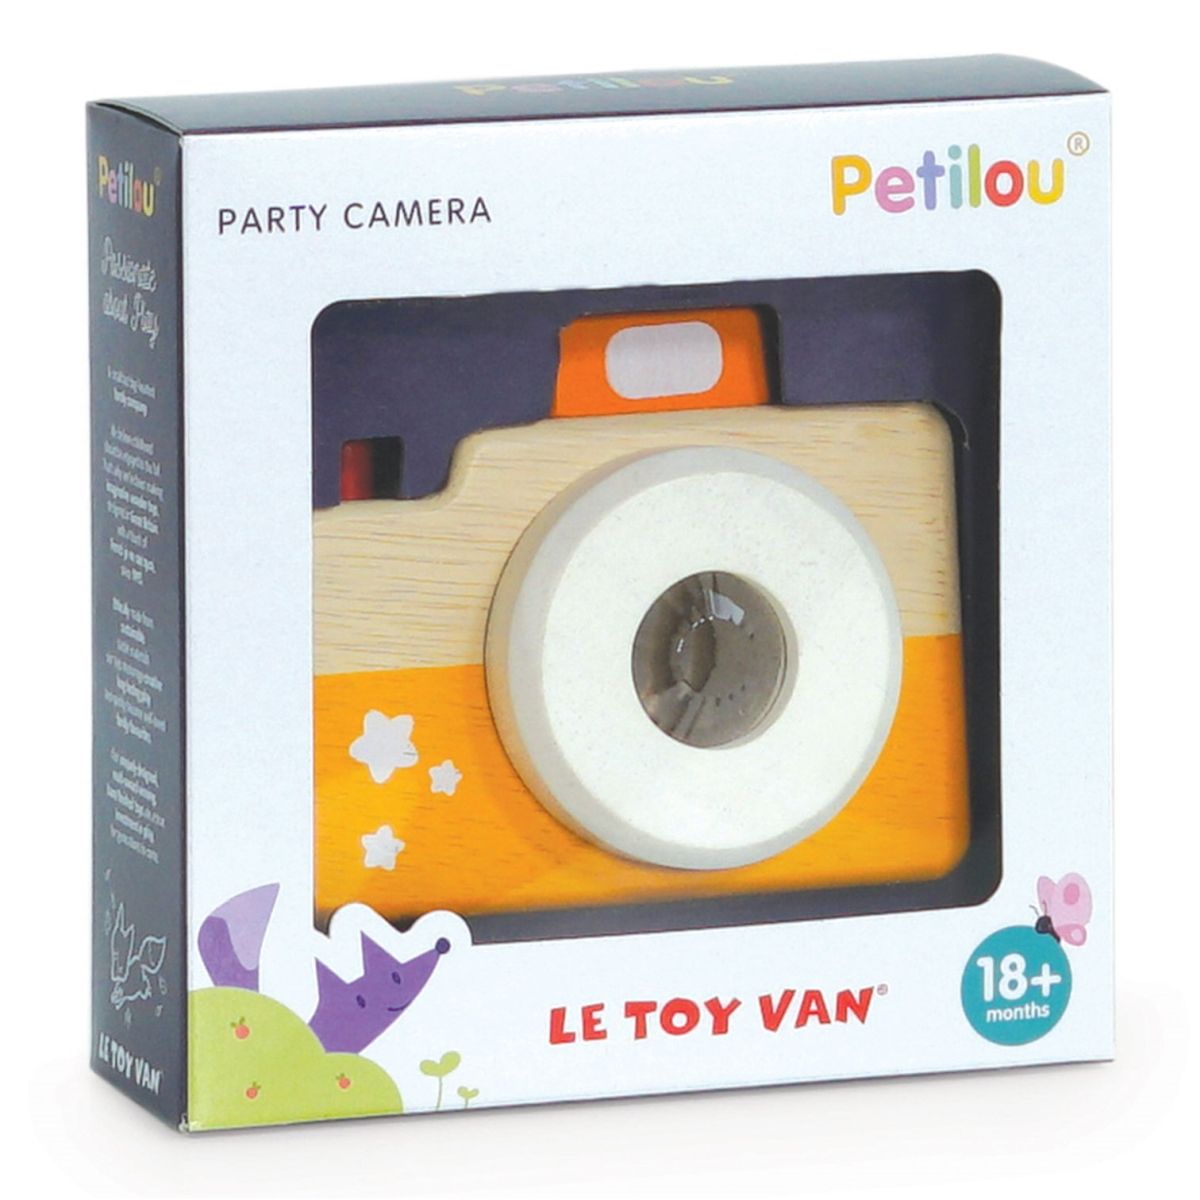 Le Toy Van Party Kamera Camera Holz Kleinkind Facetten Linse Spielzeug 